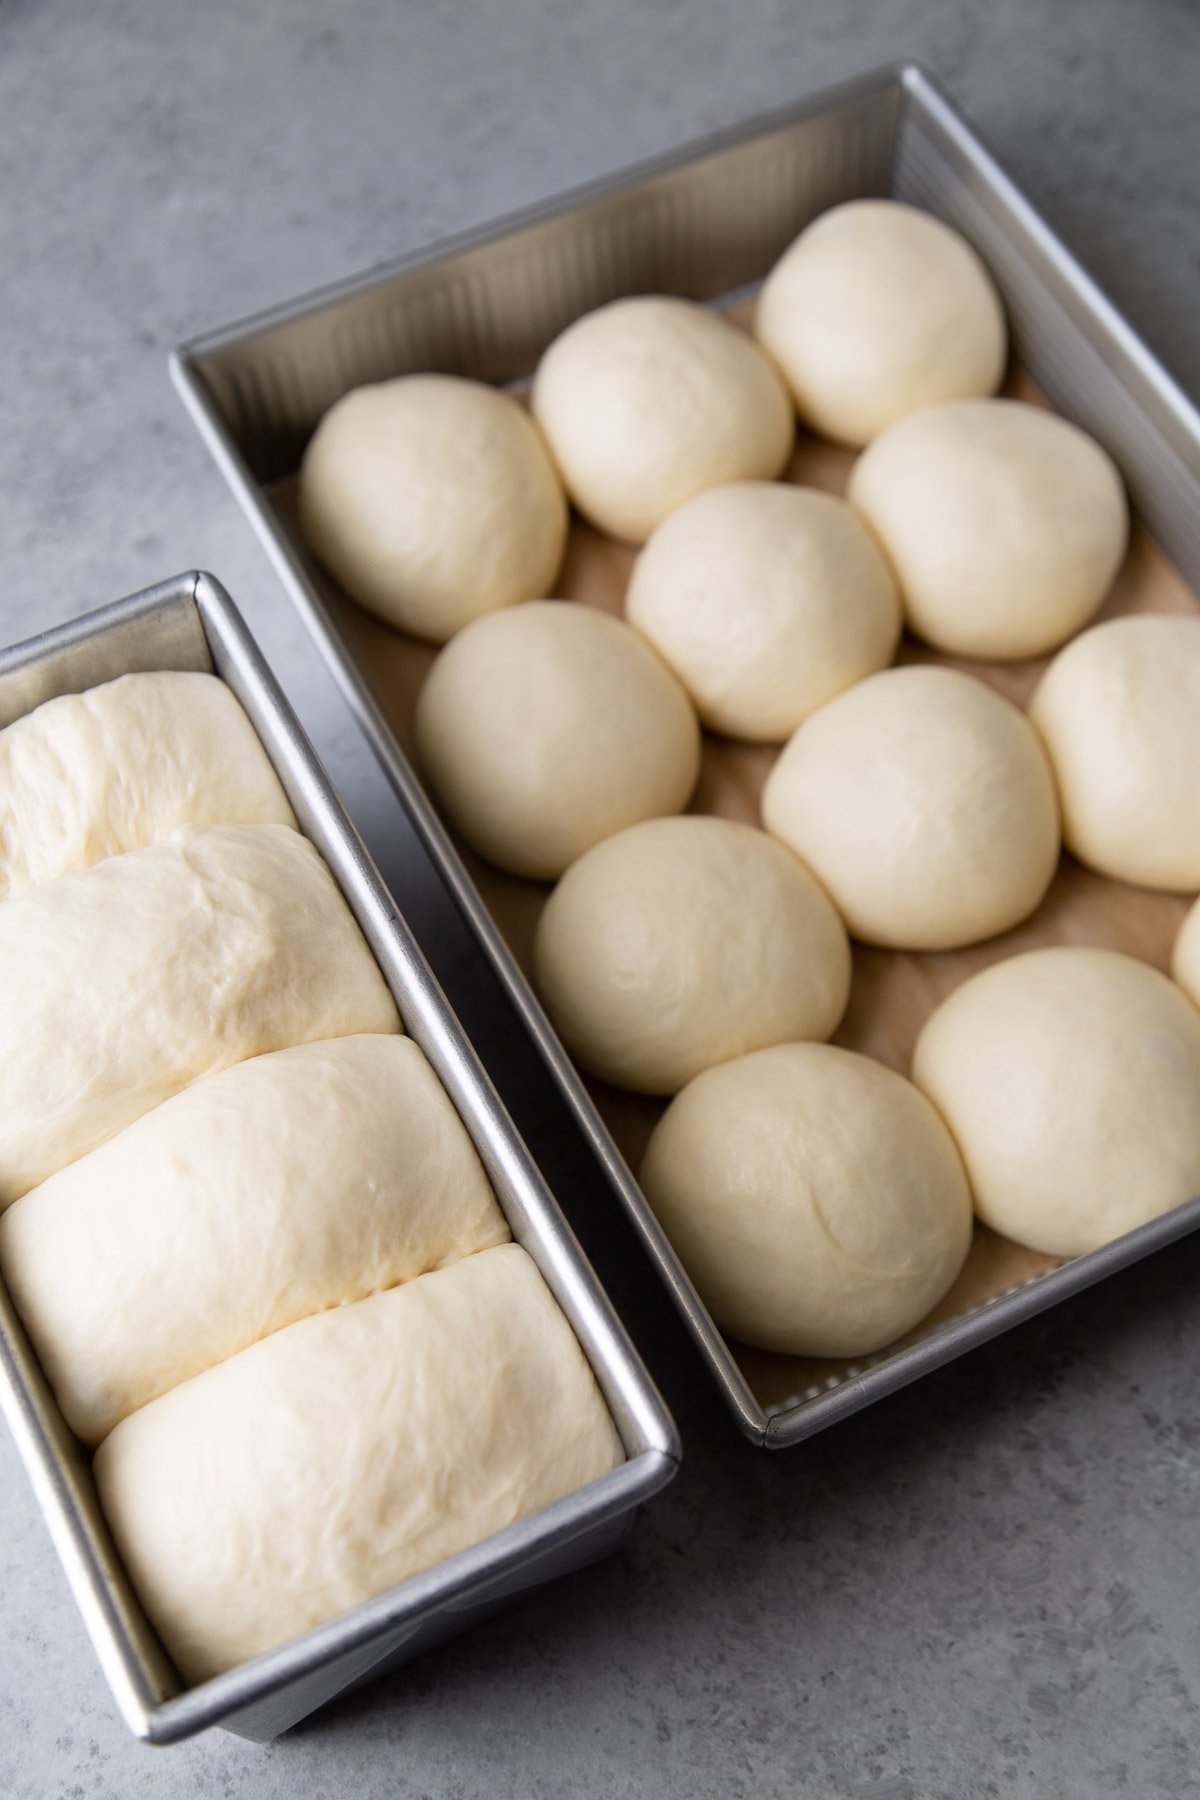 alternate ways to shape milk bread dough including loaf bread or dinner rolls.